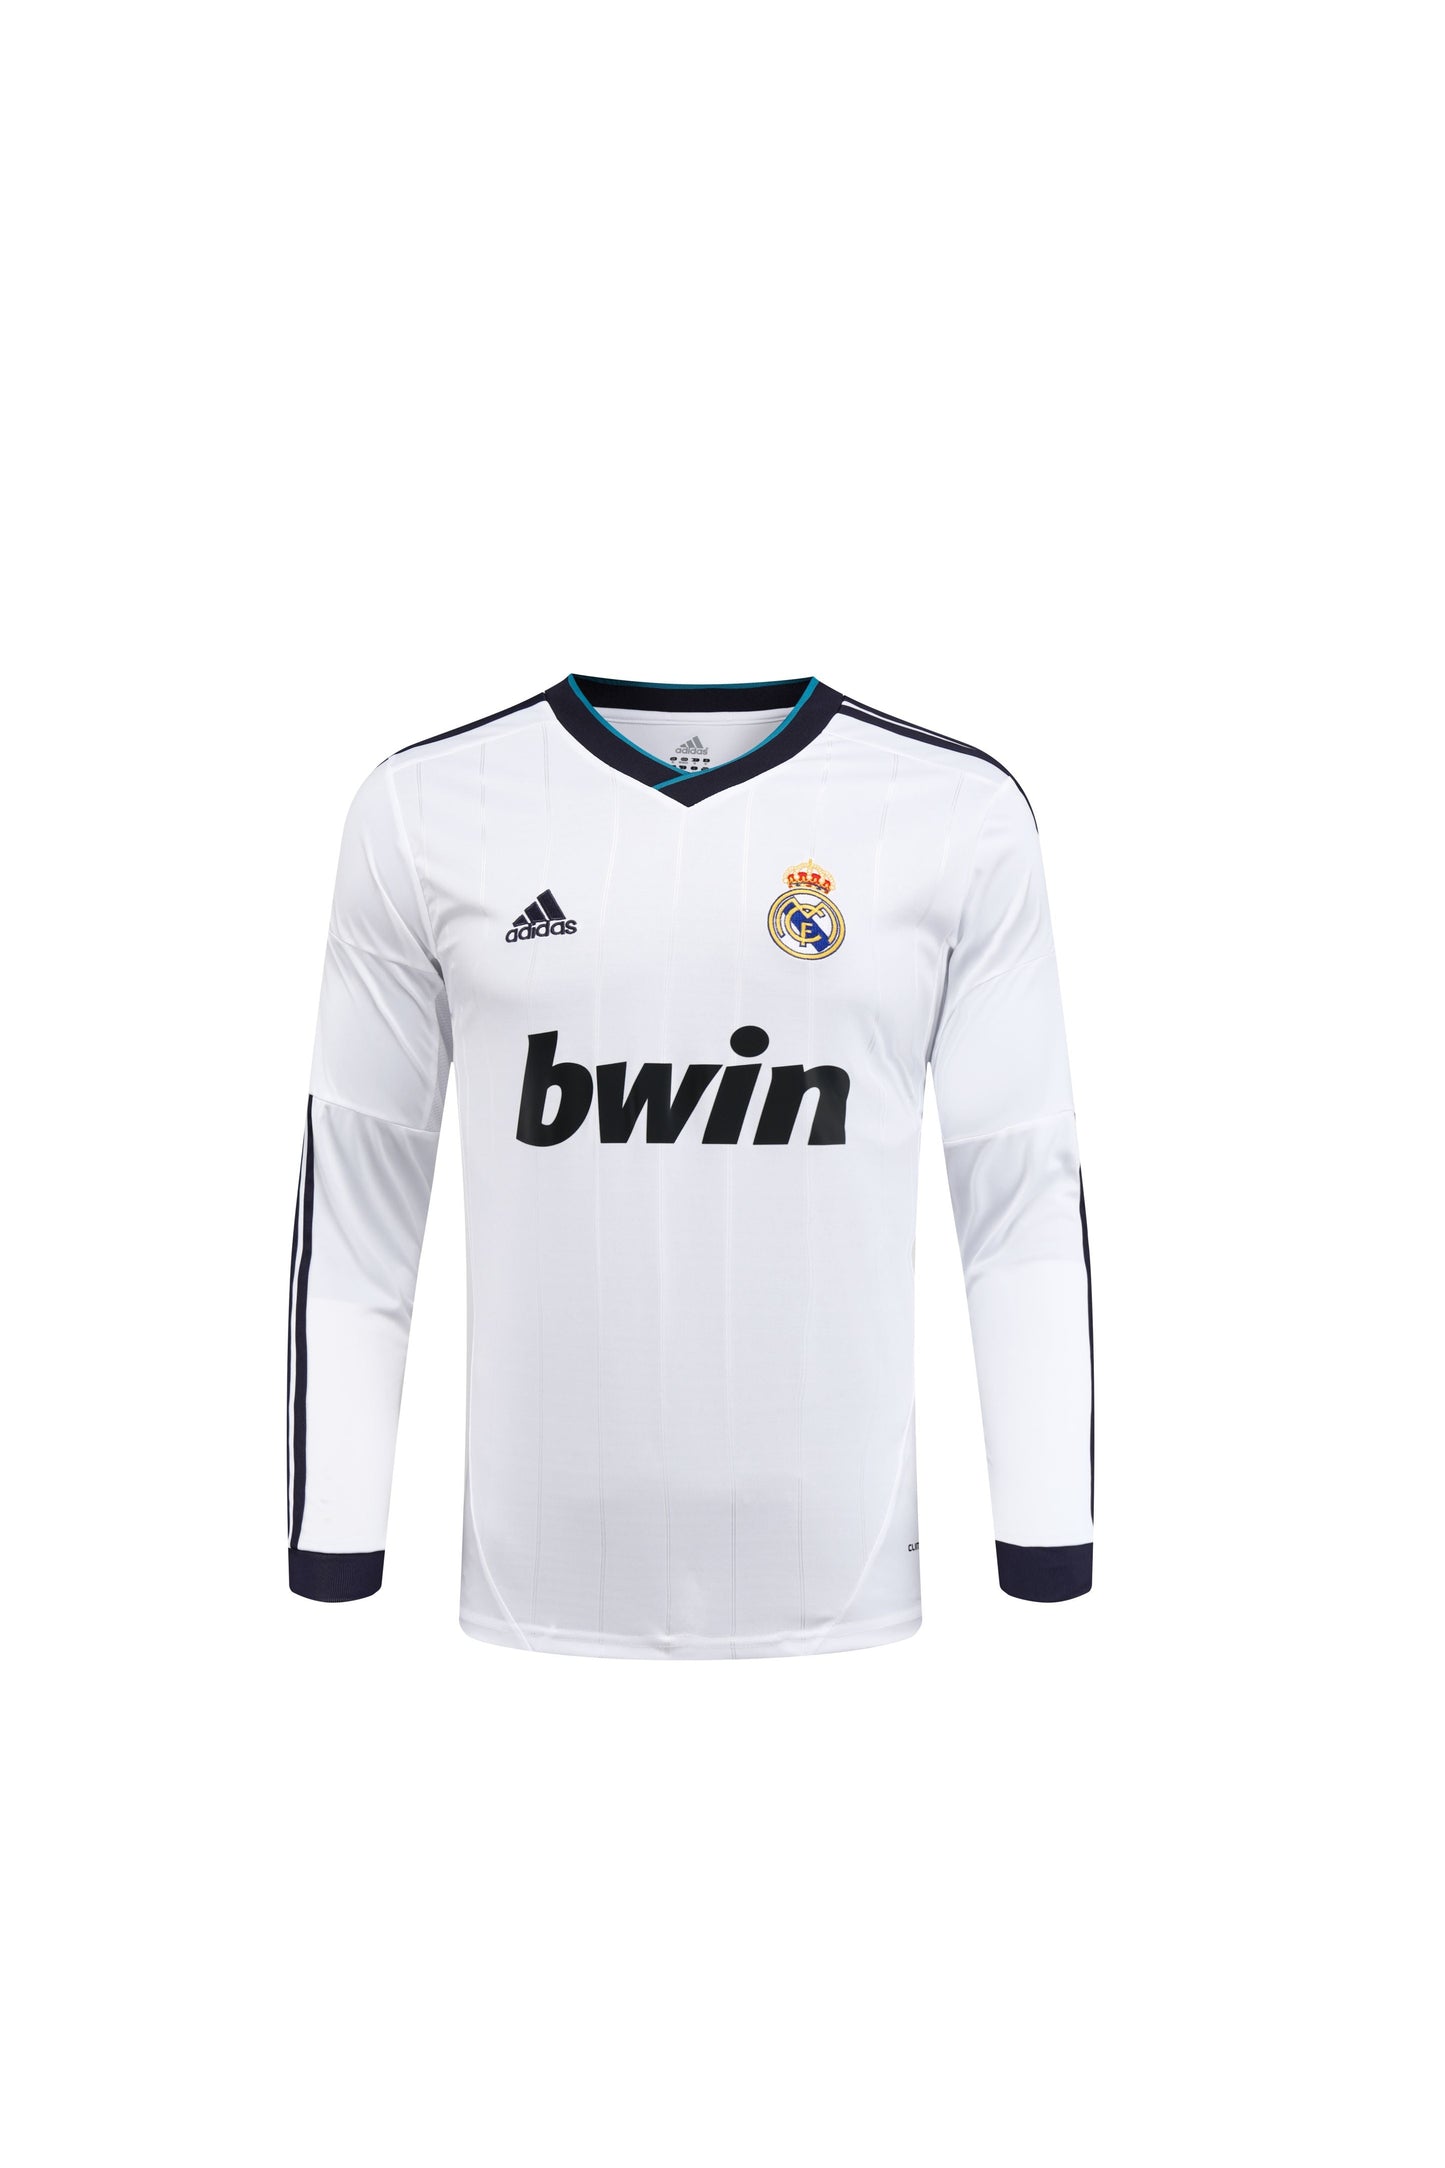 2012/13 Real Madrid long sleeve home shirt